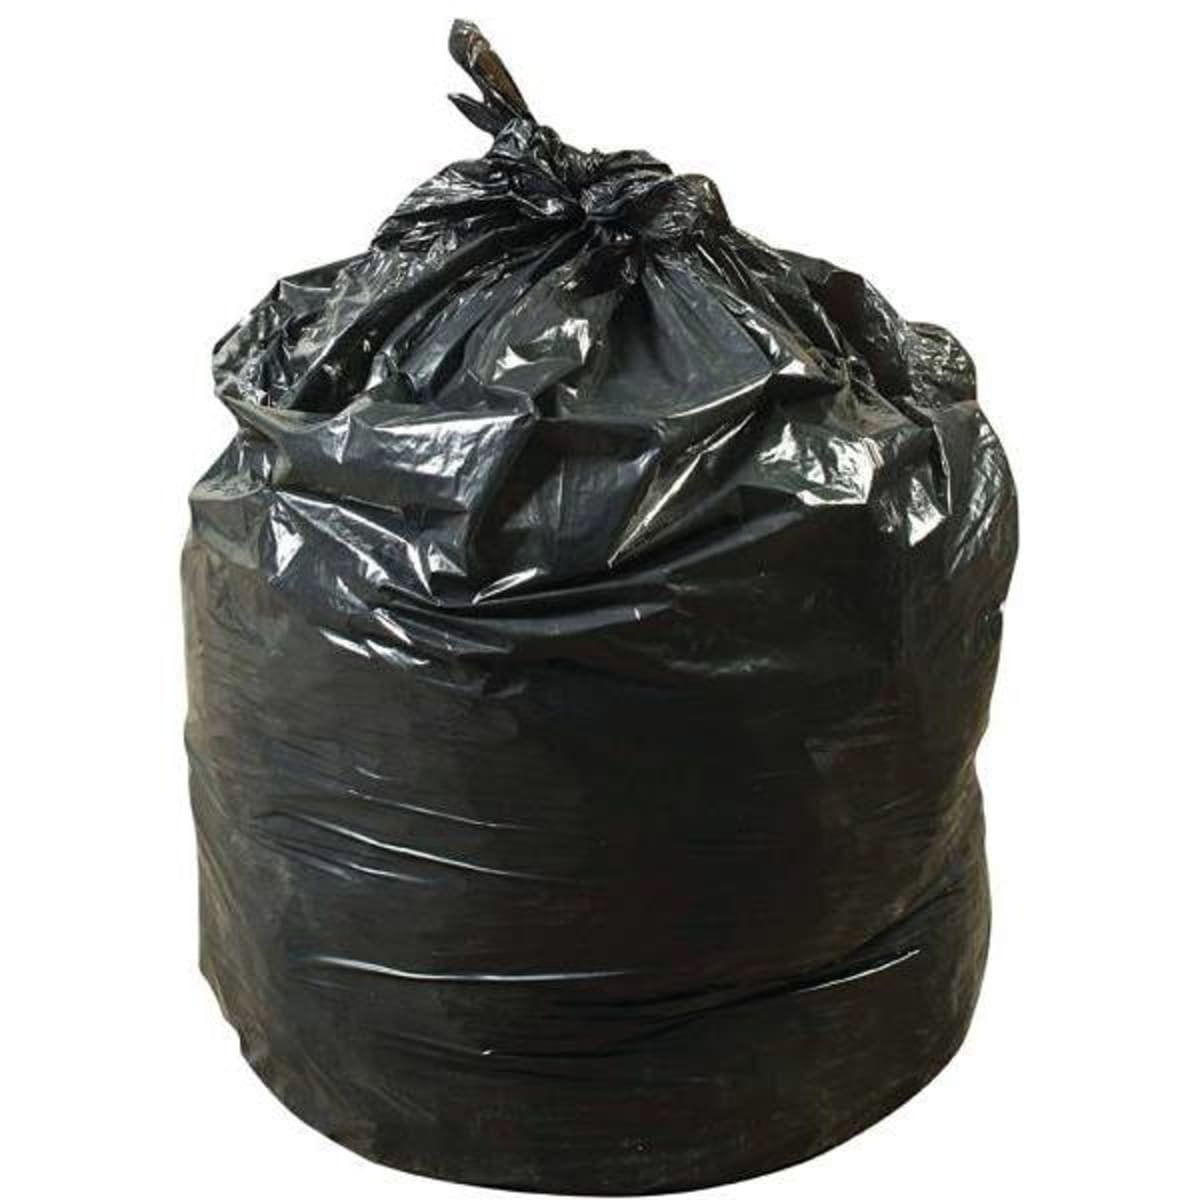 44 Gallon Medical Waste Trash Bags - 1.3 Mil - 150/case